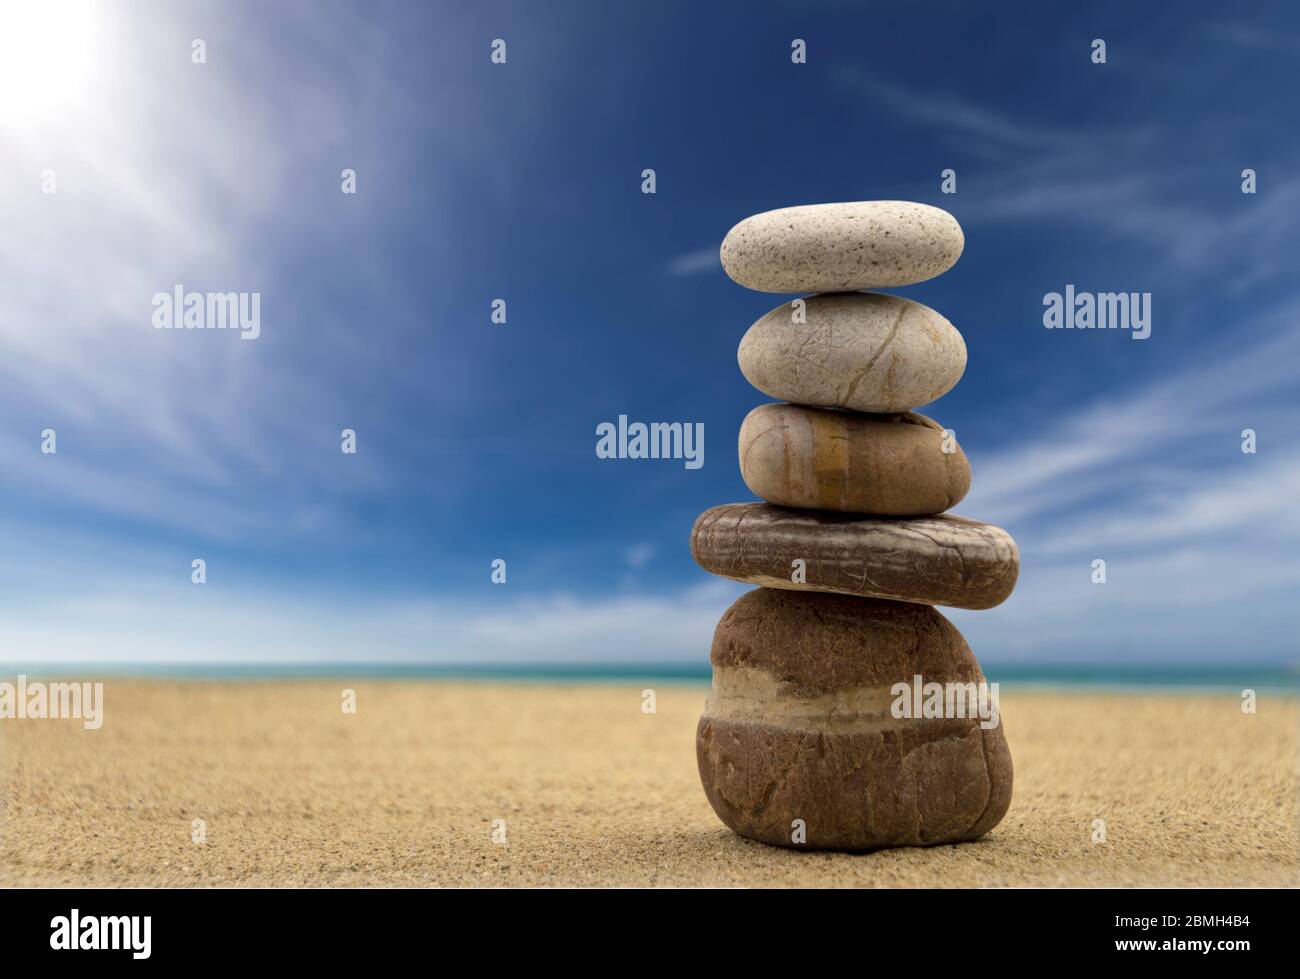 Zen stones balanced on the beach Stock Photo